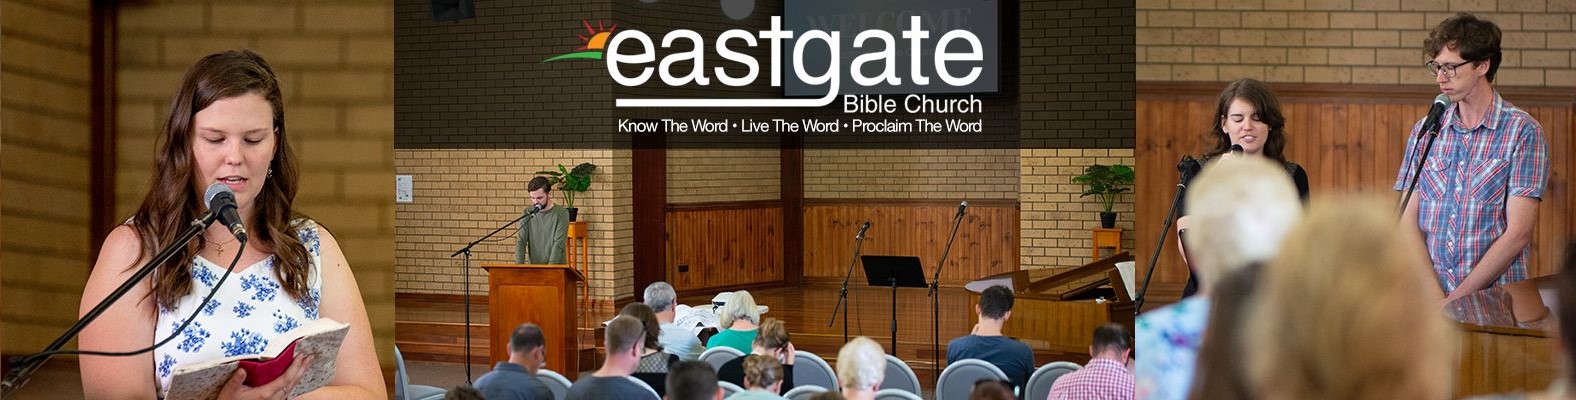 Eastgate Bible Church